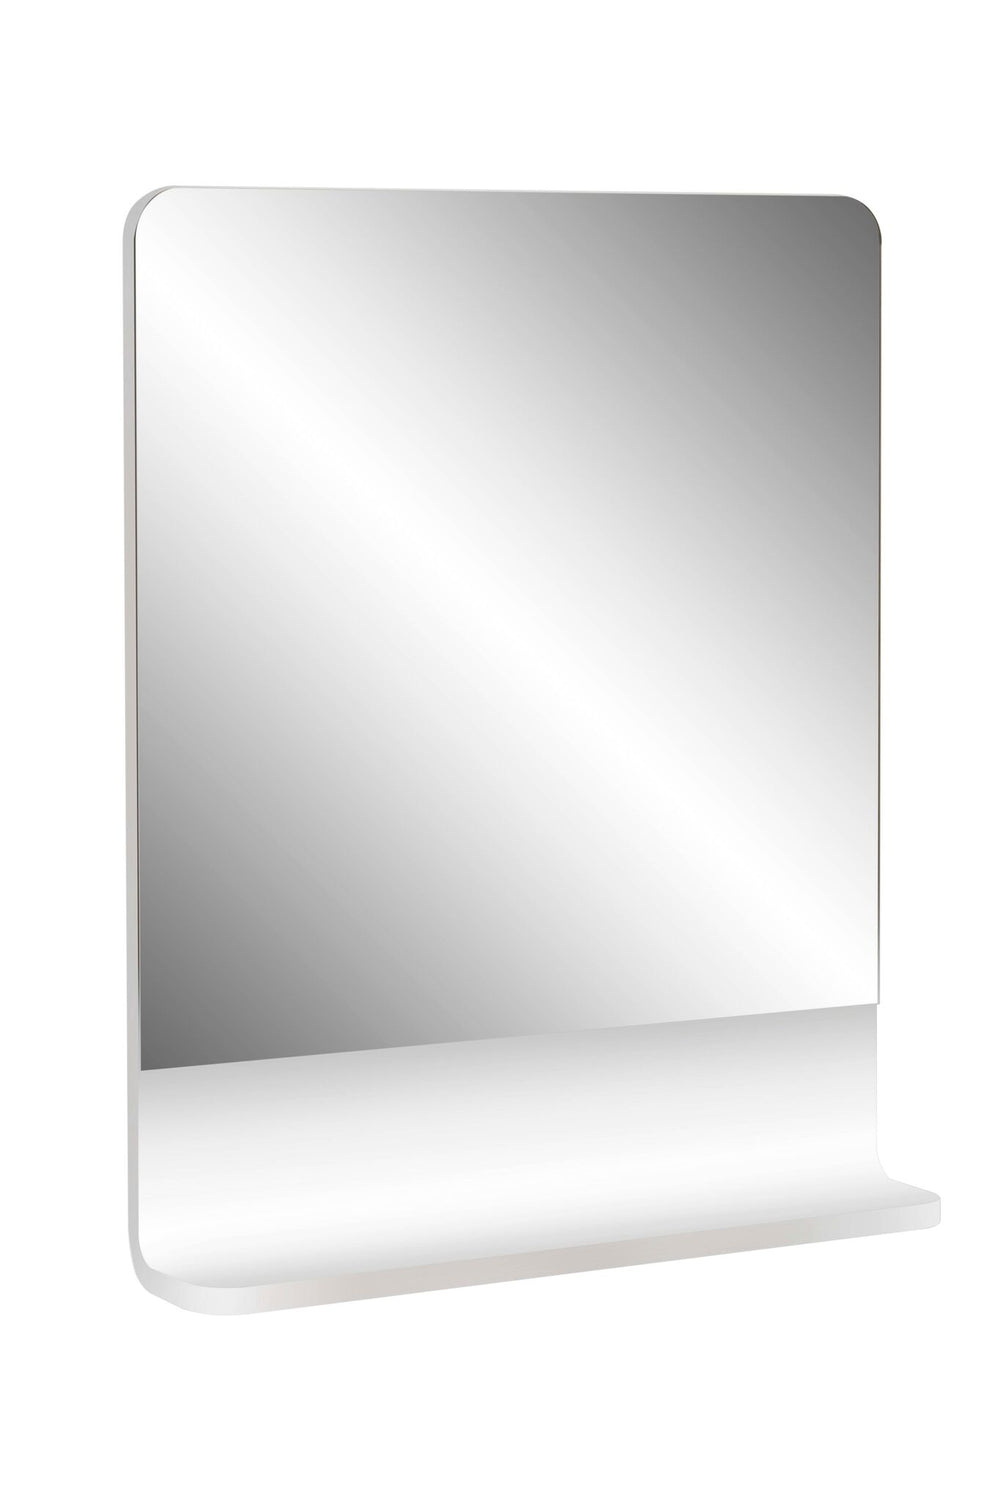 Cara 600 Mirror Shelf WHITE